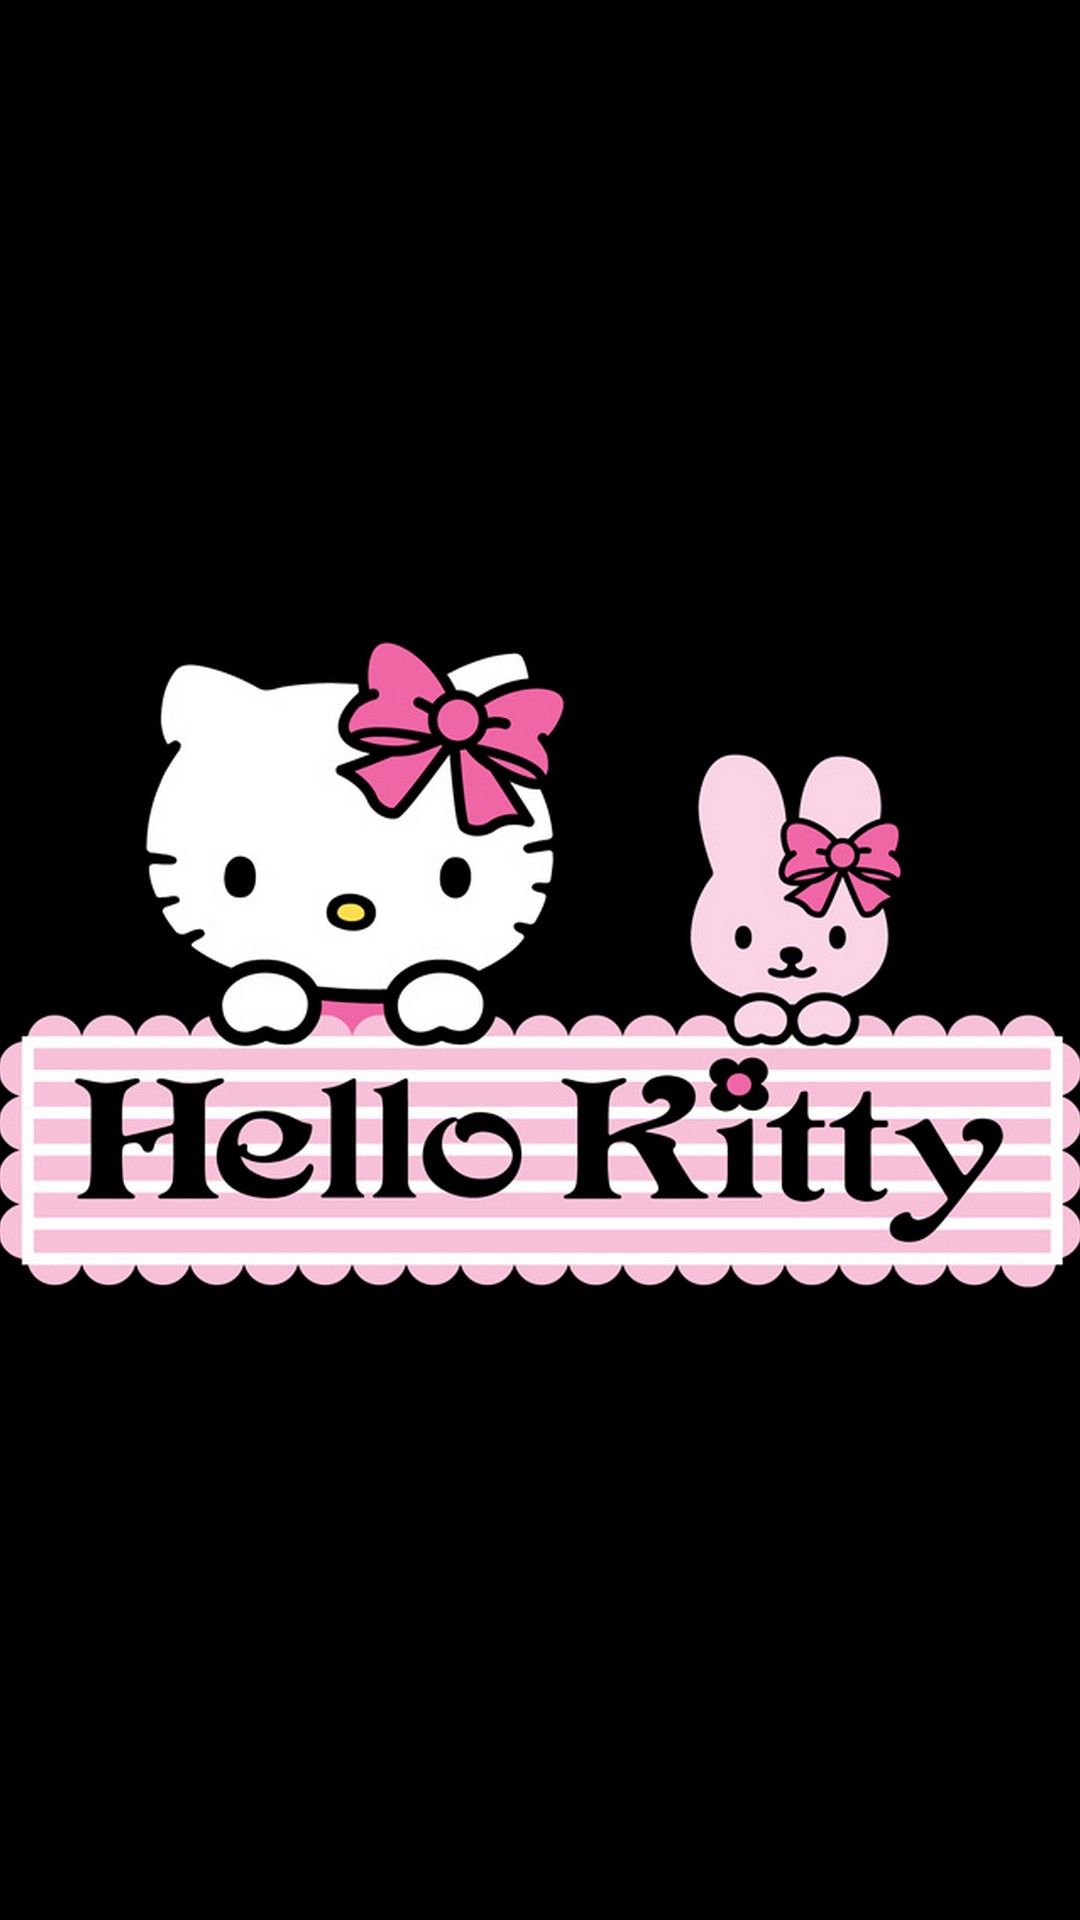 Hello Kitty phone wallpaper